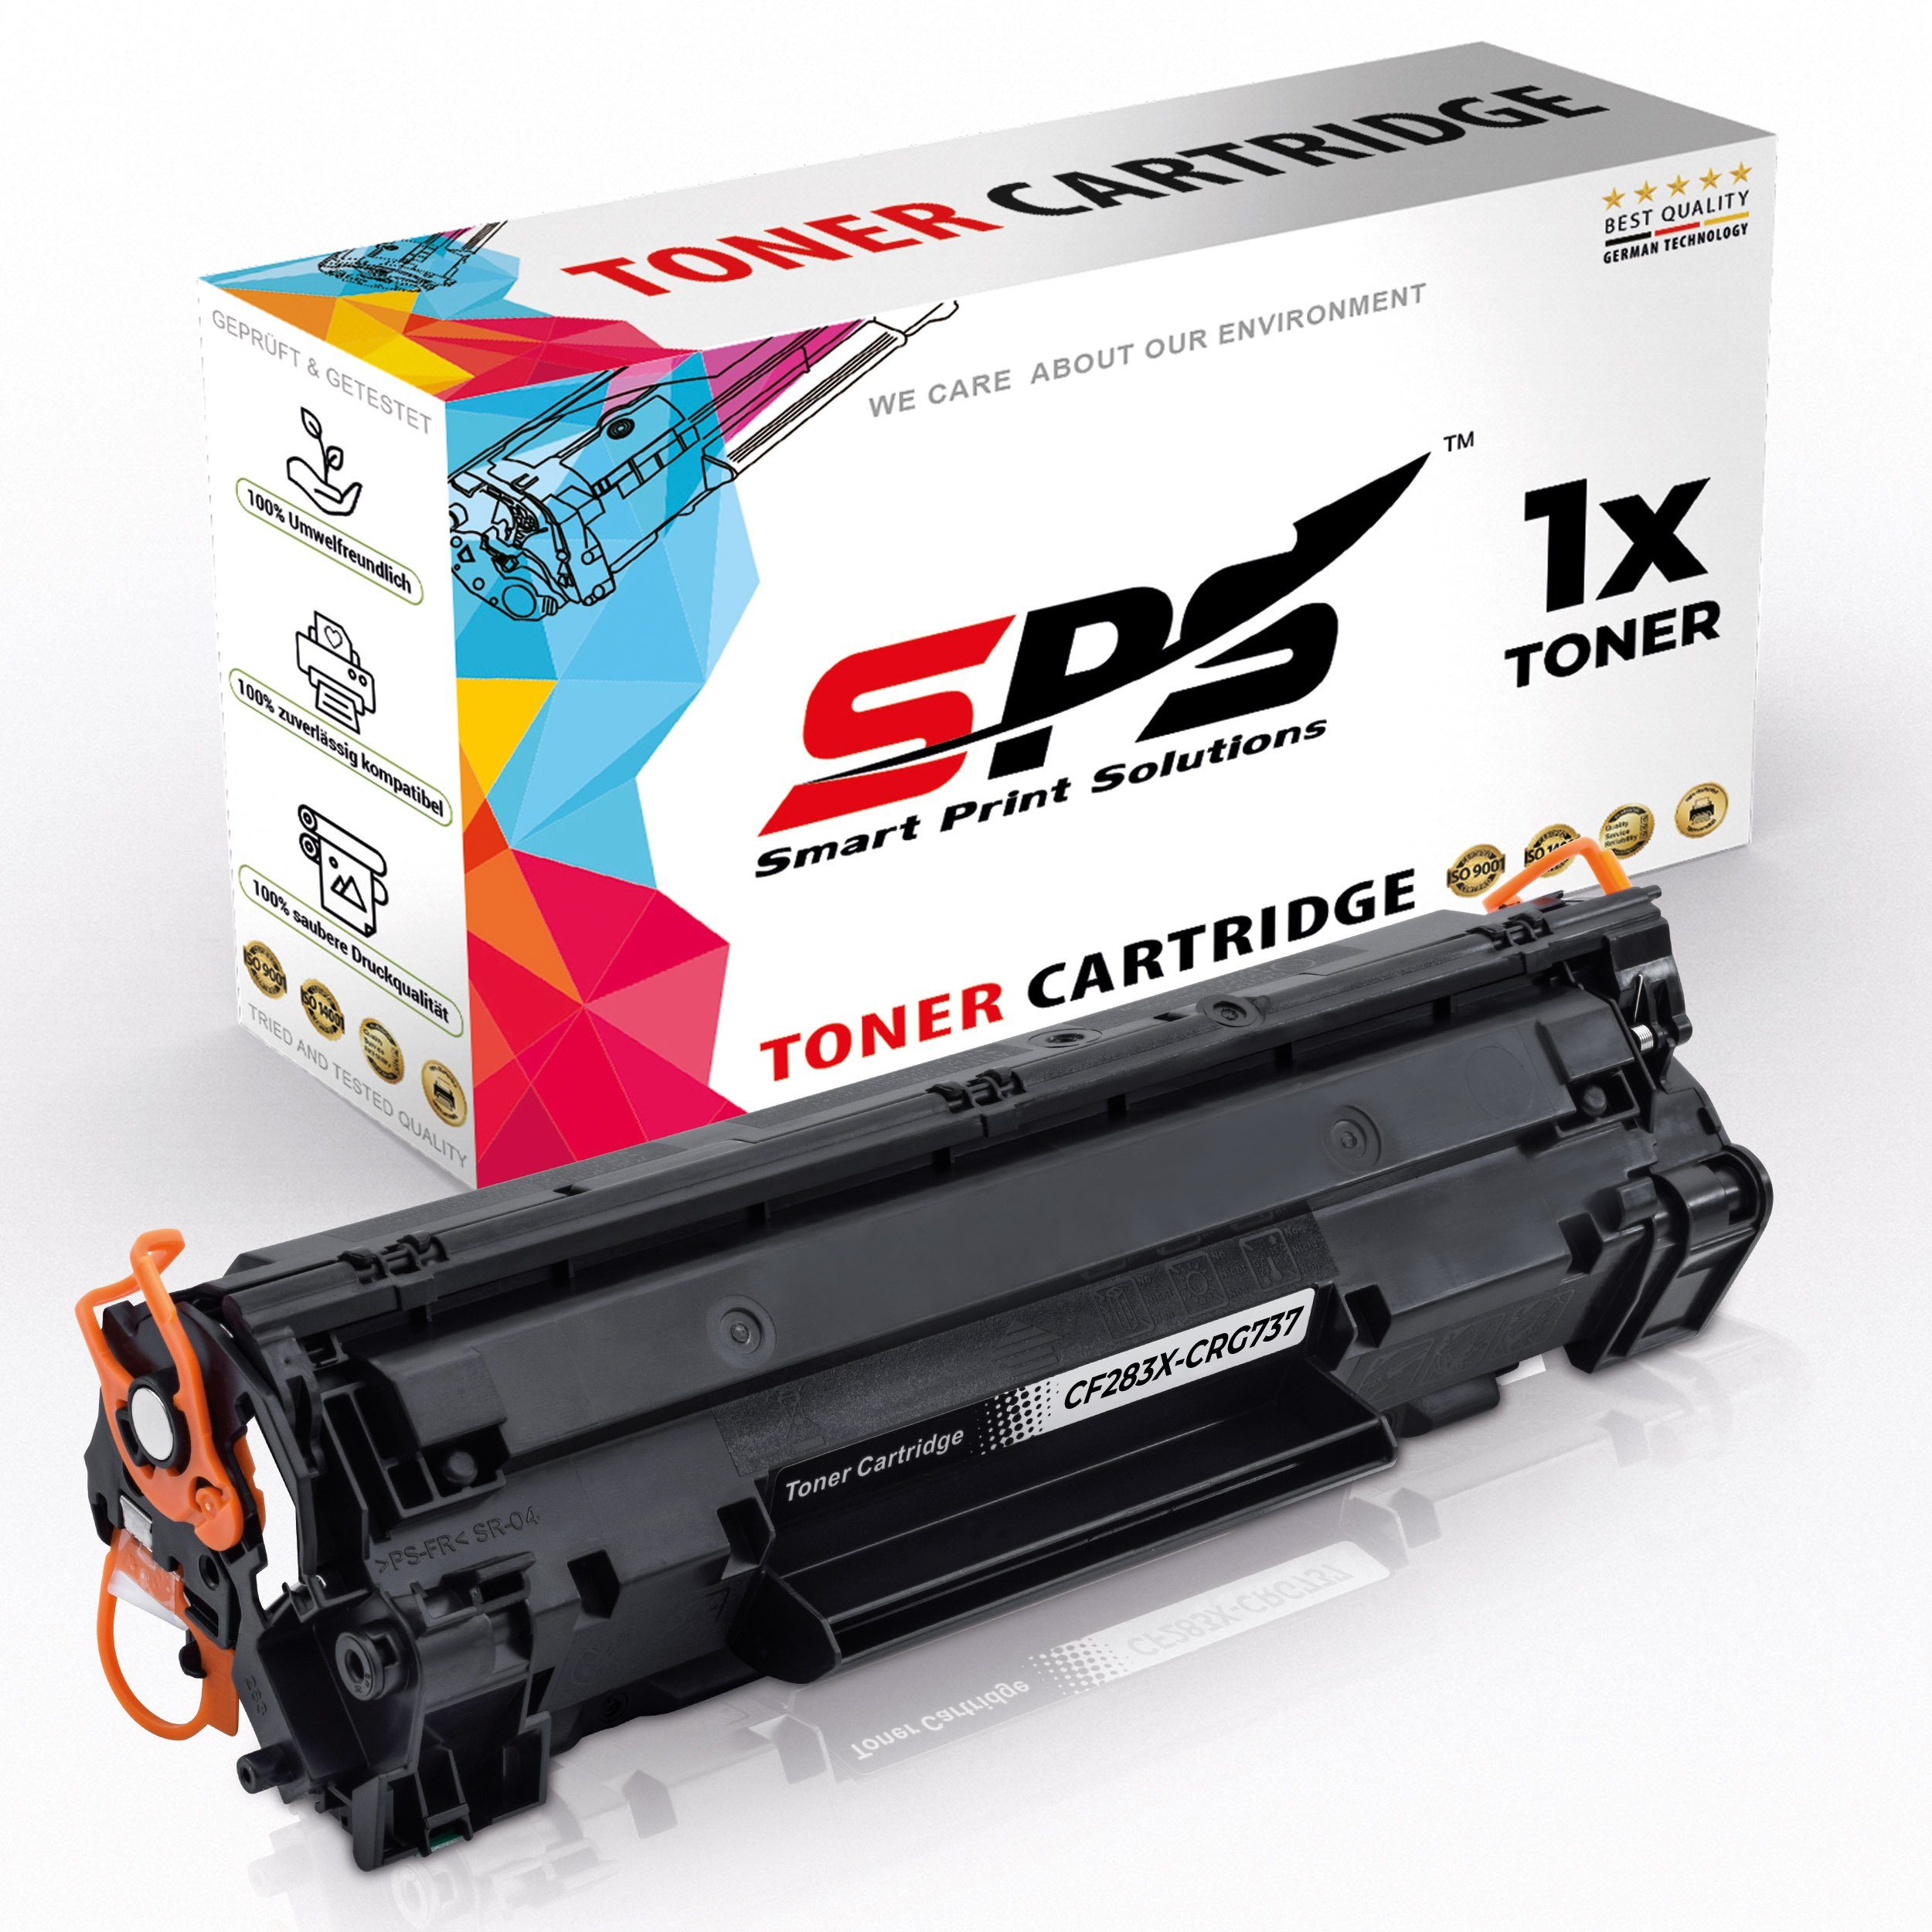 (1er SPS Pro Tonerkartusche 202 Pack) HP M CF283X, Laserjet Kompatibel für